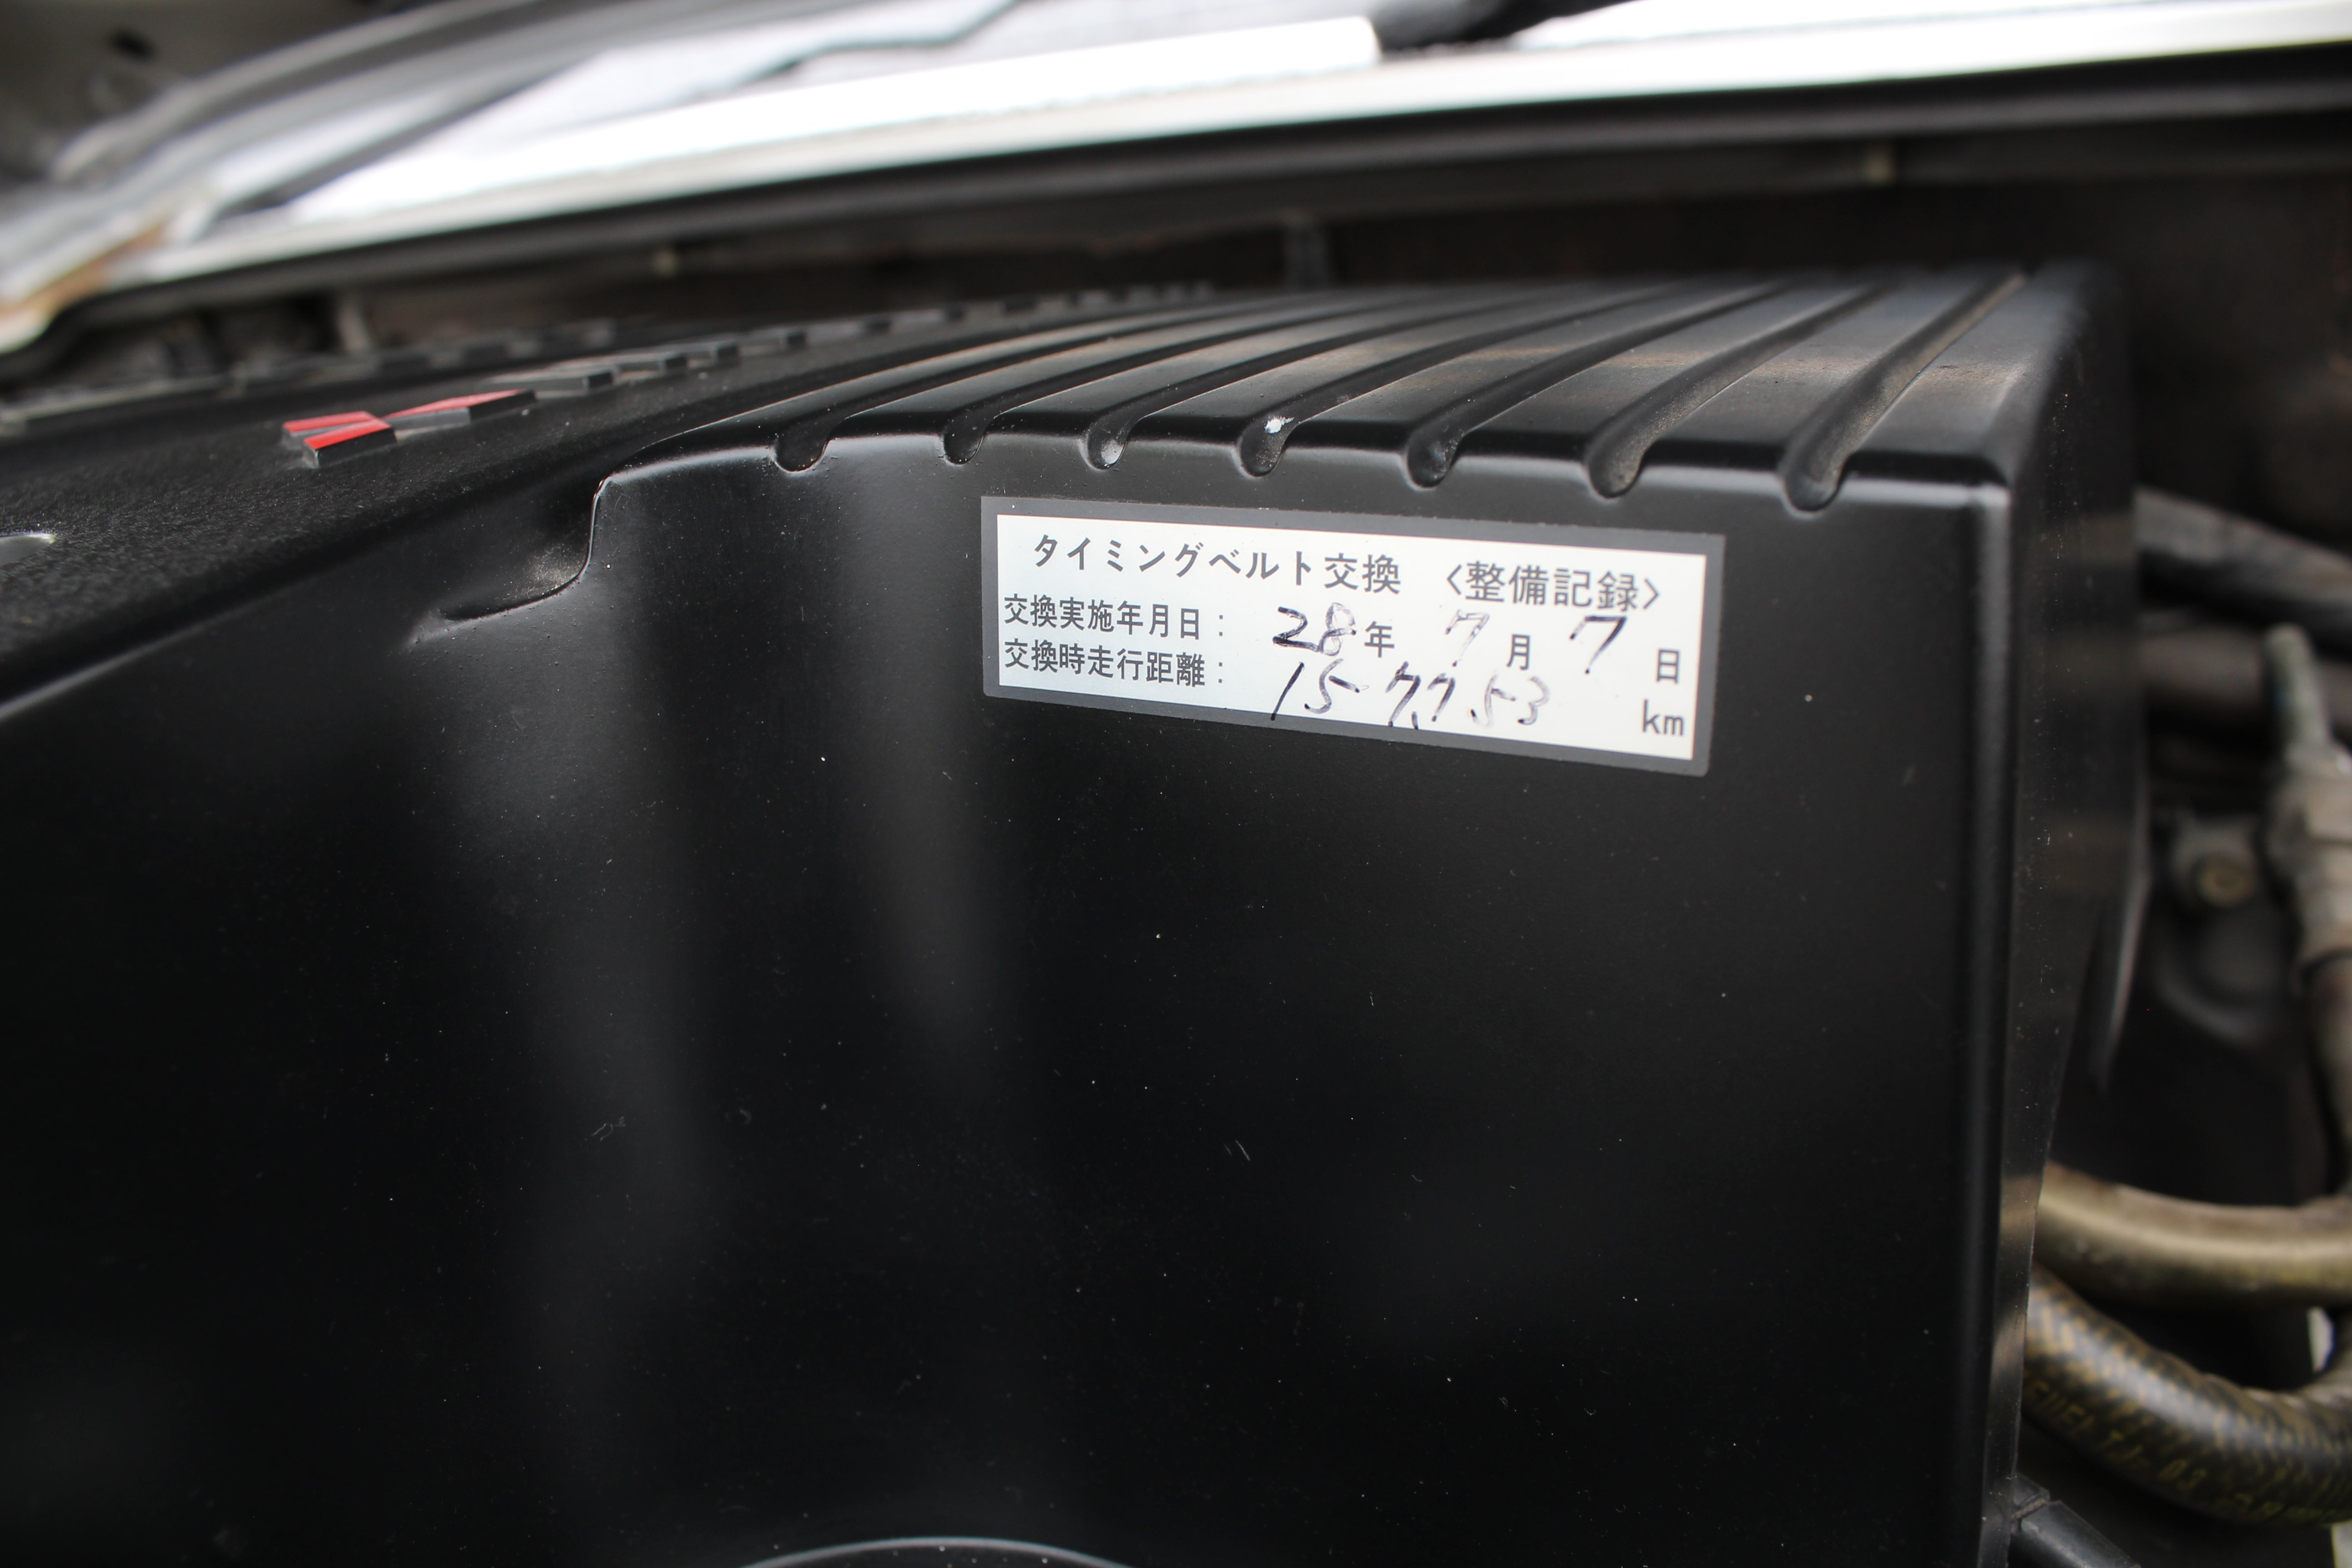 JDM 97 Mitsubishi Pajero Evolution Manual 4x4 Rare On Sale Sold